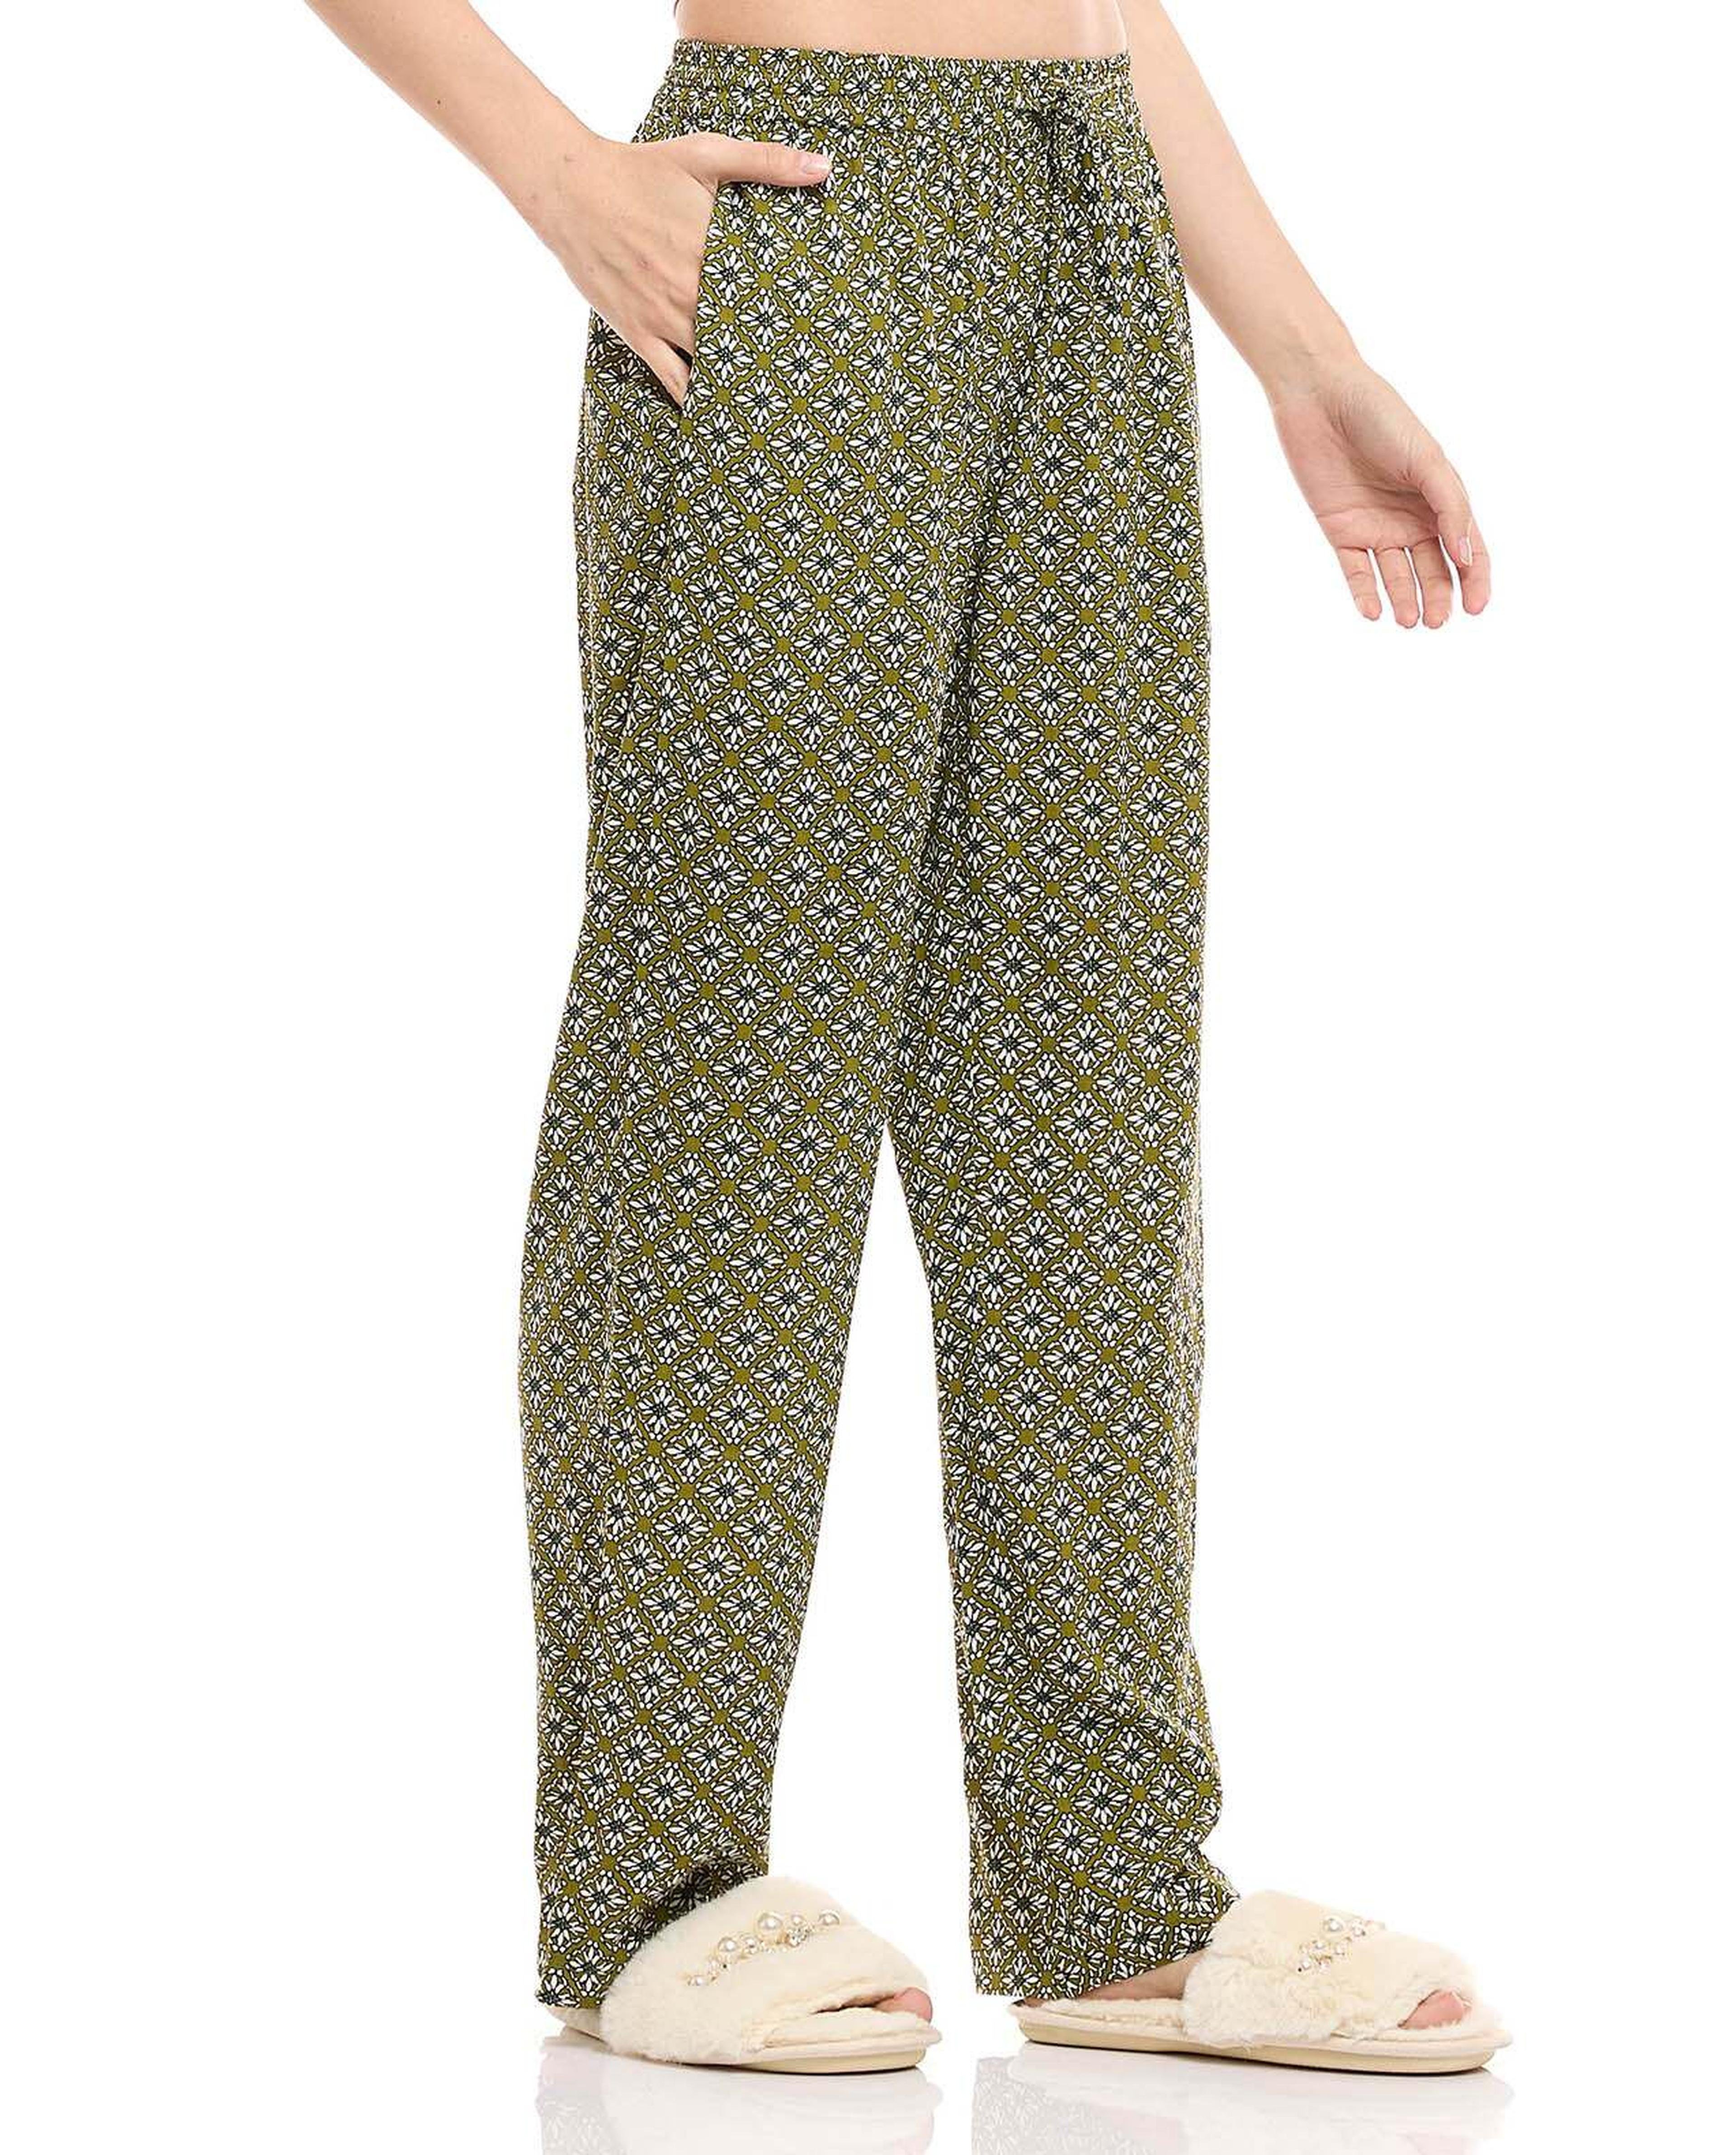 Patterned Pyjama Bottom with Drawstring Waist